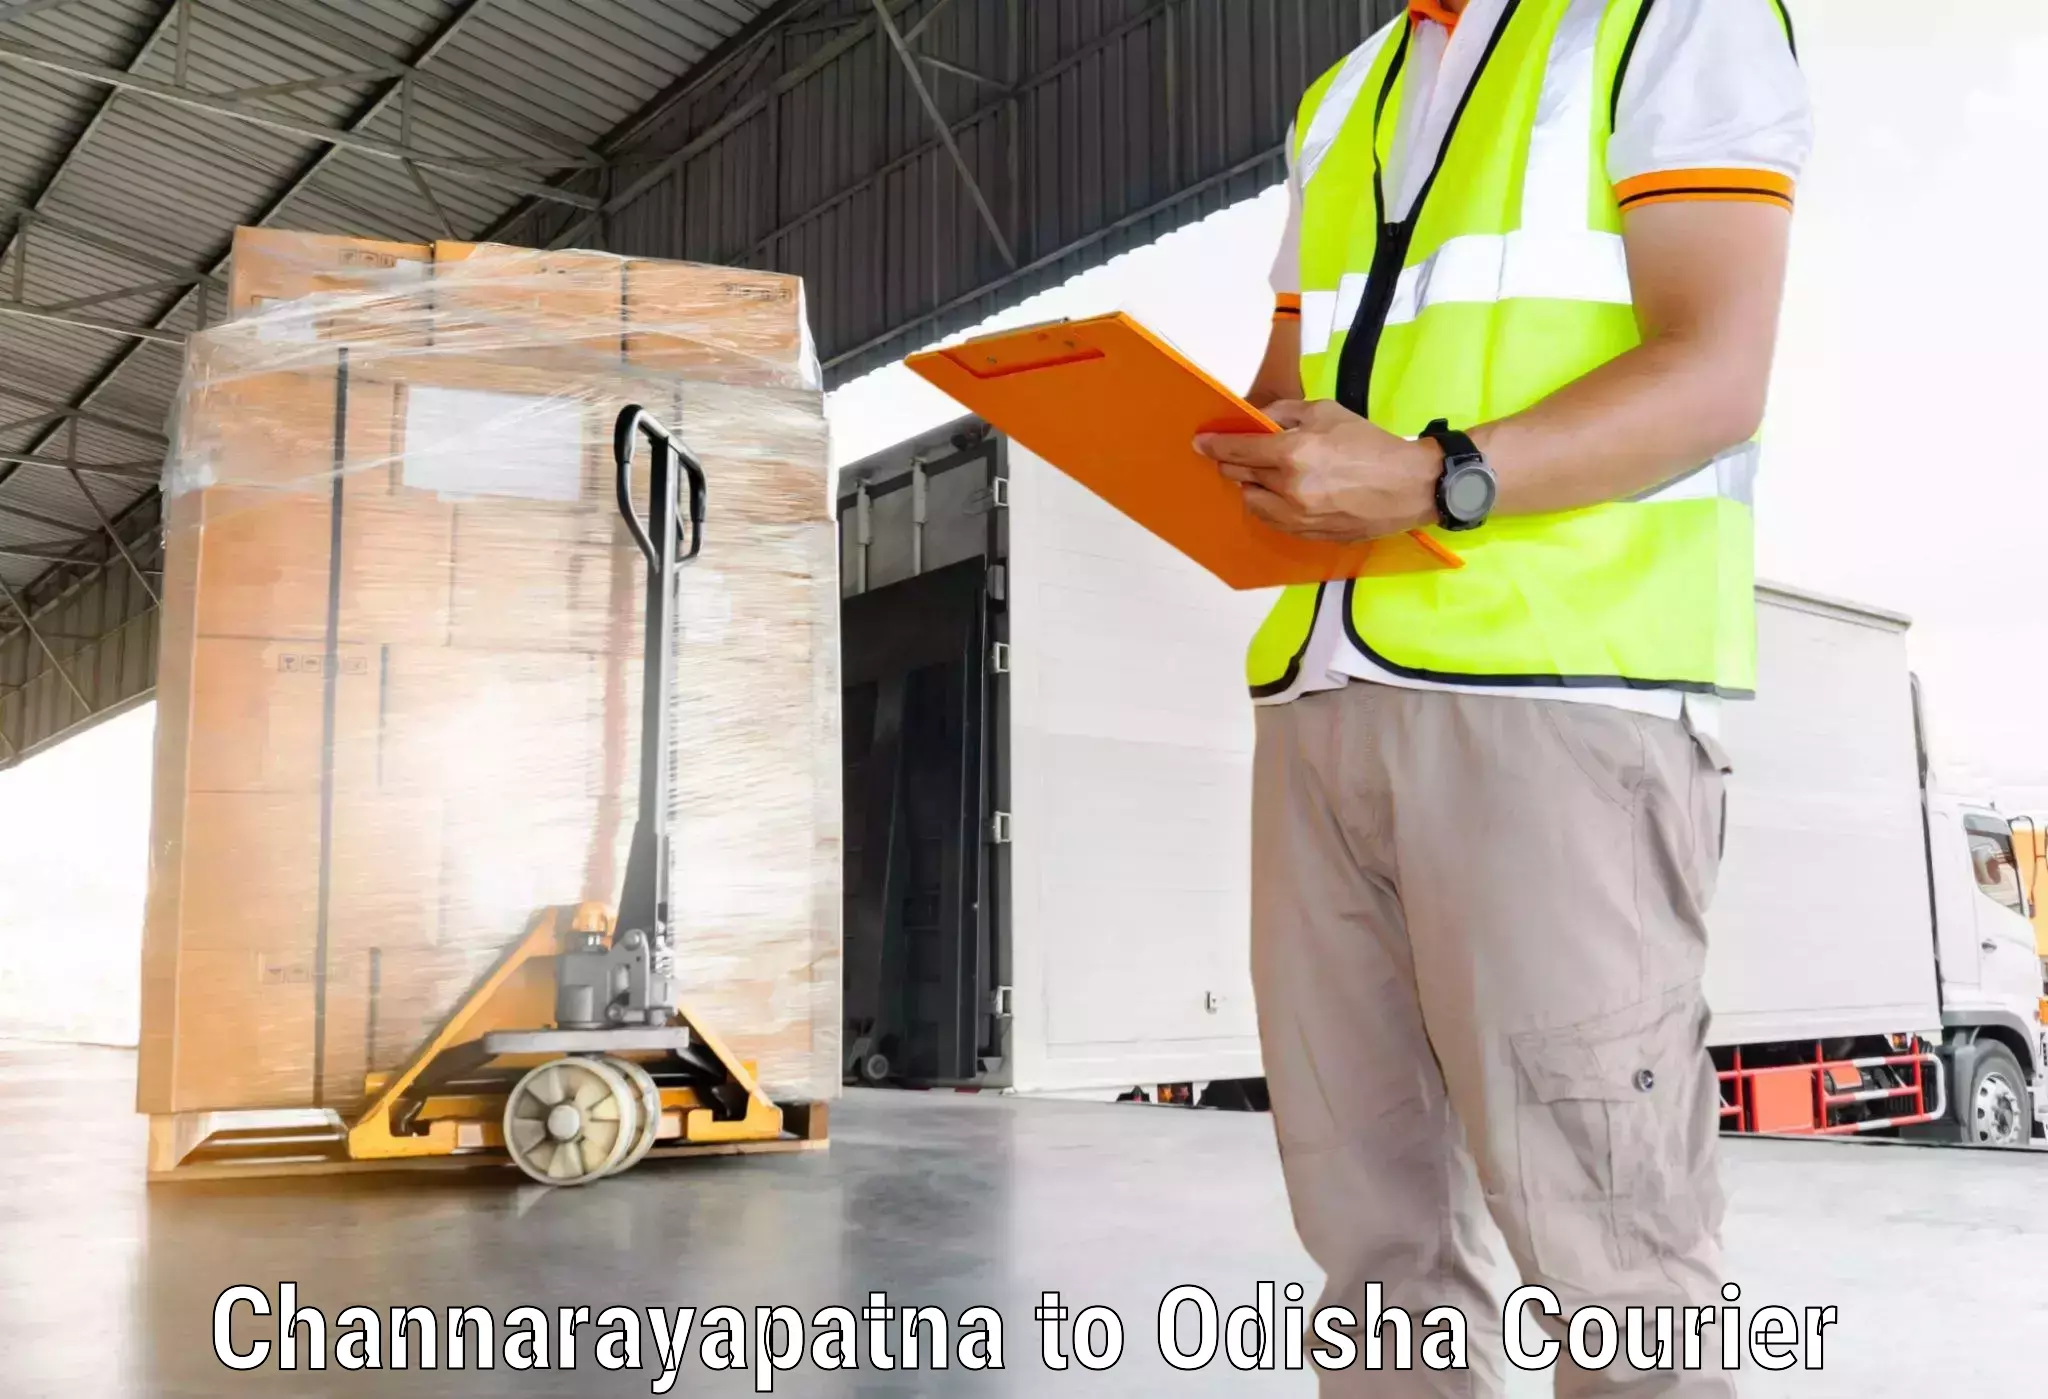 Courier service innovation Channarayapatna to Chandbali